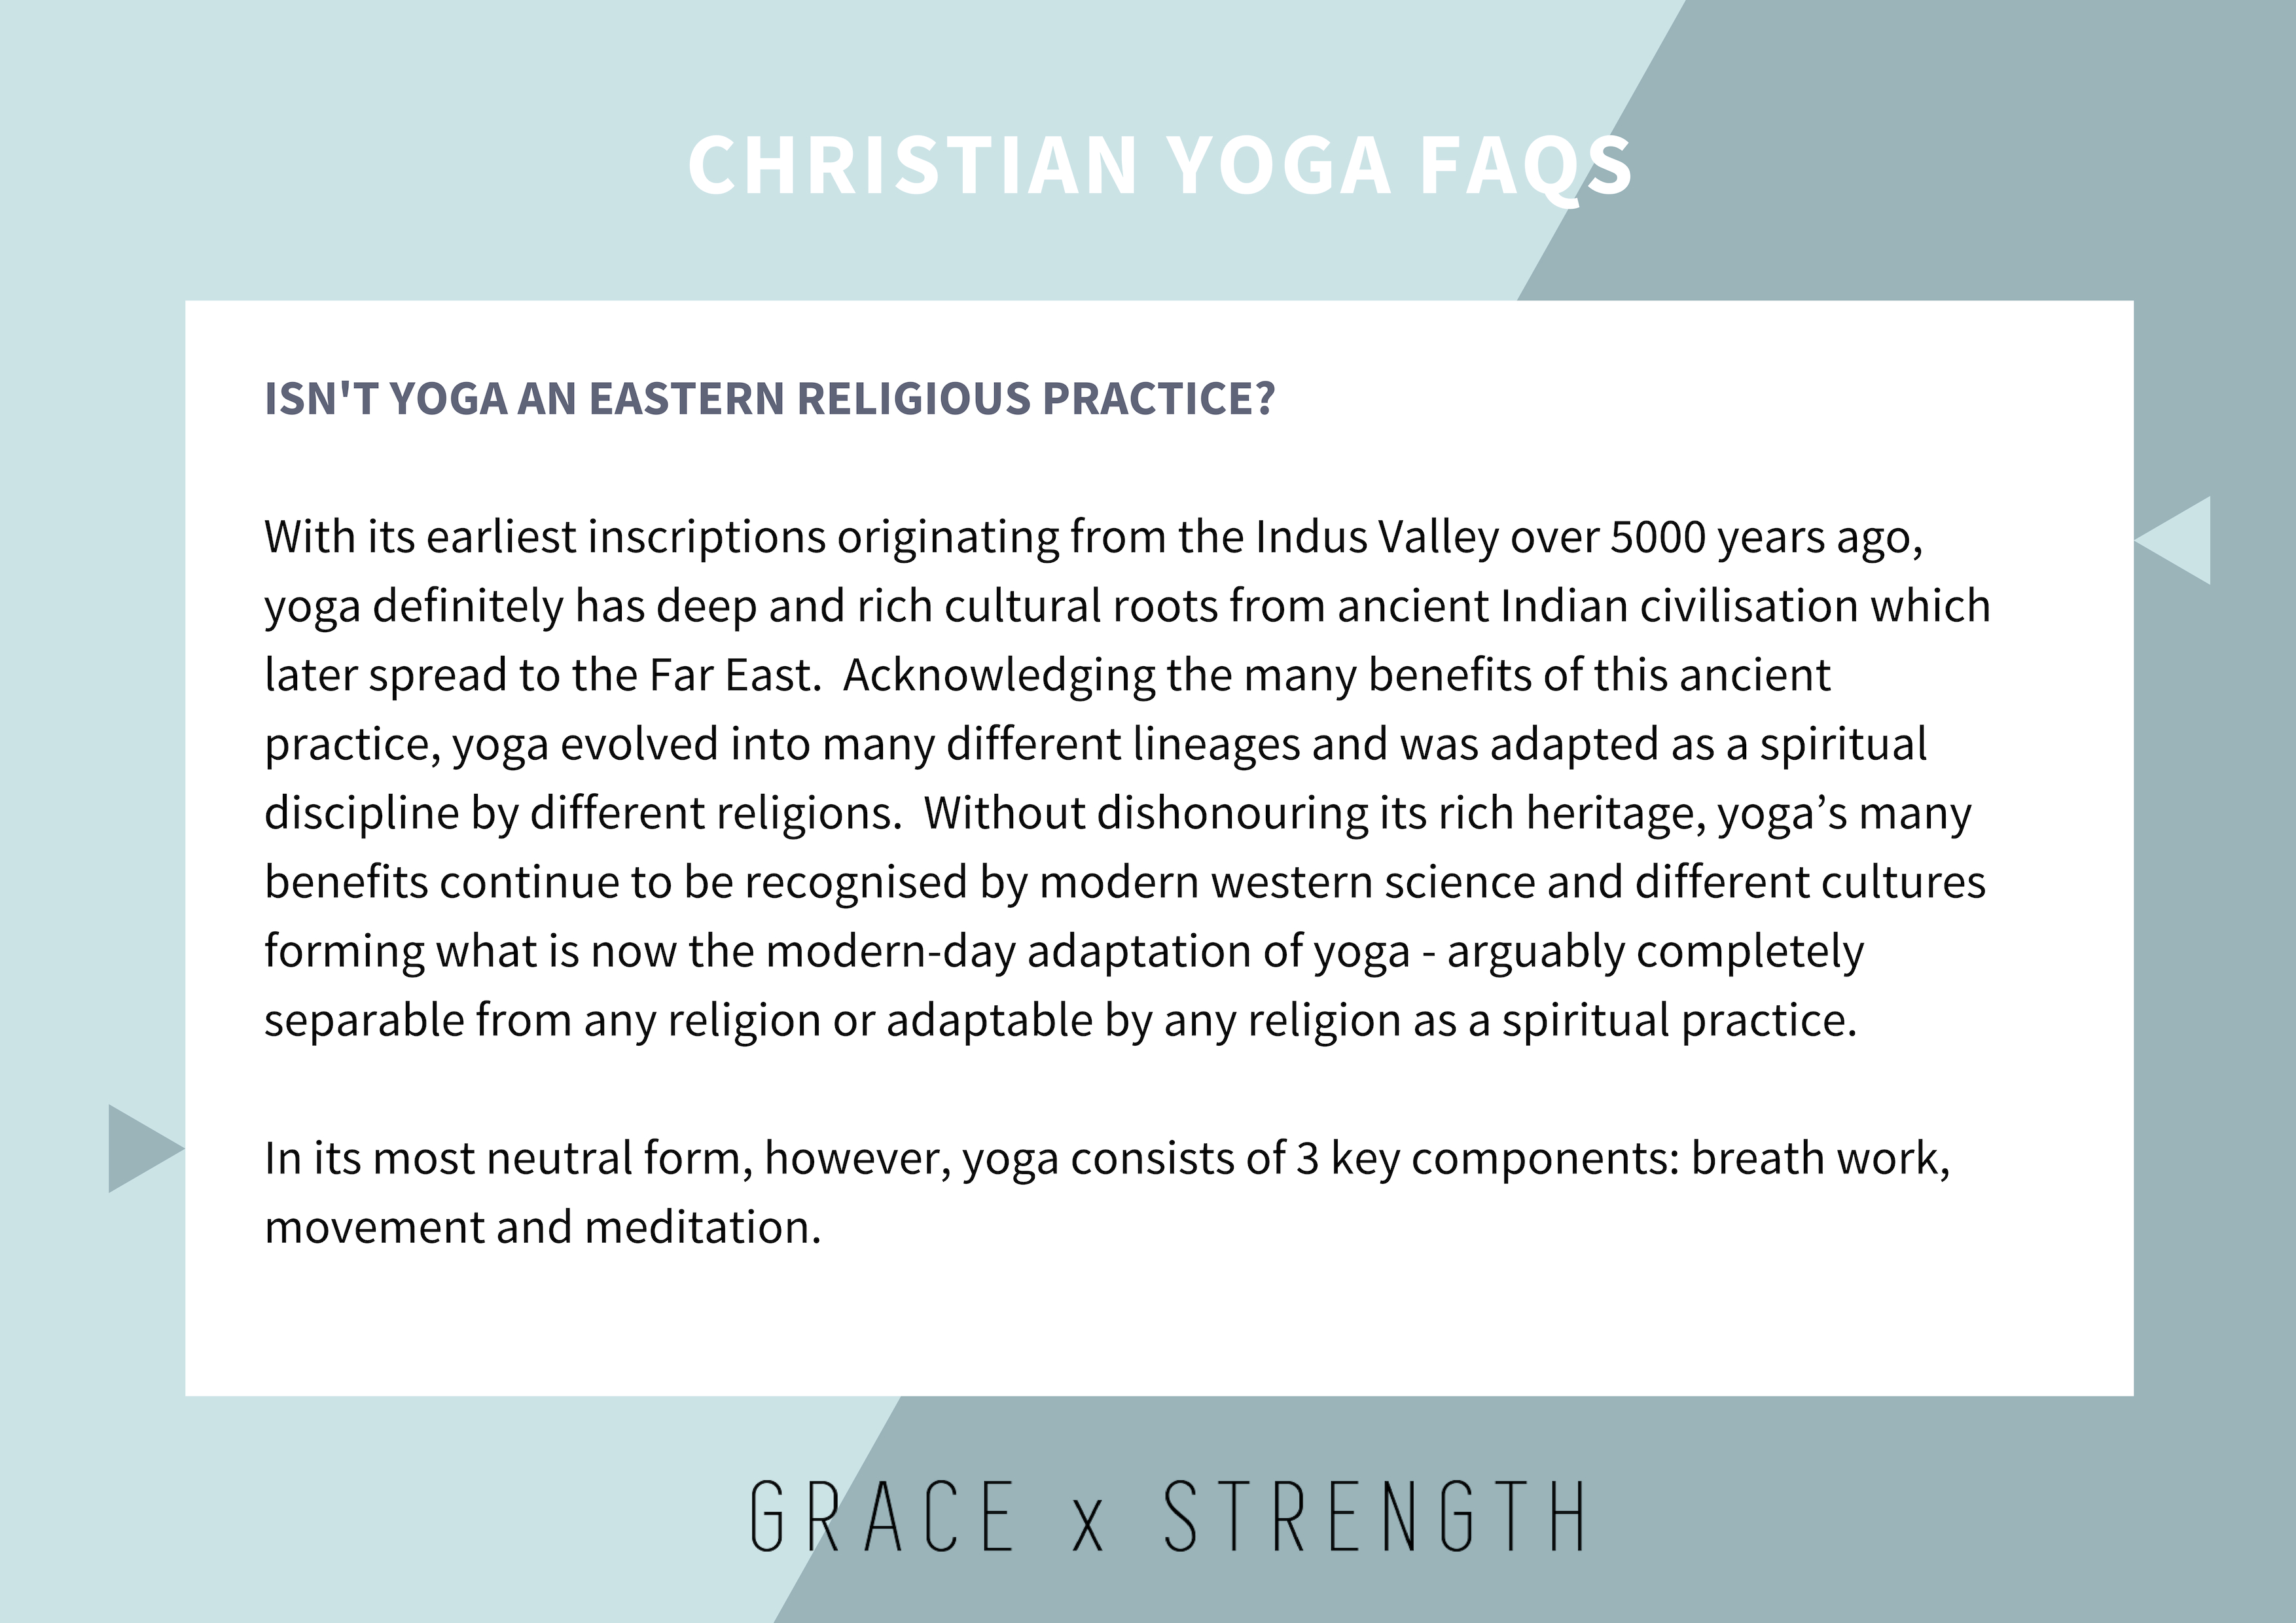 Isn’t yoga an Eastern religious practice?